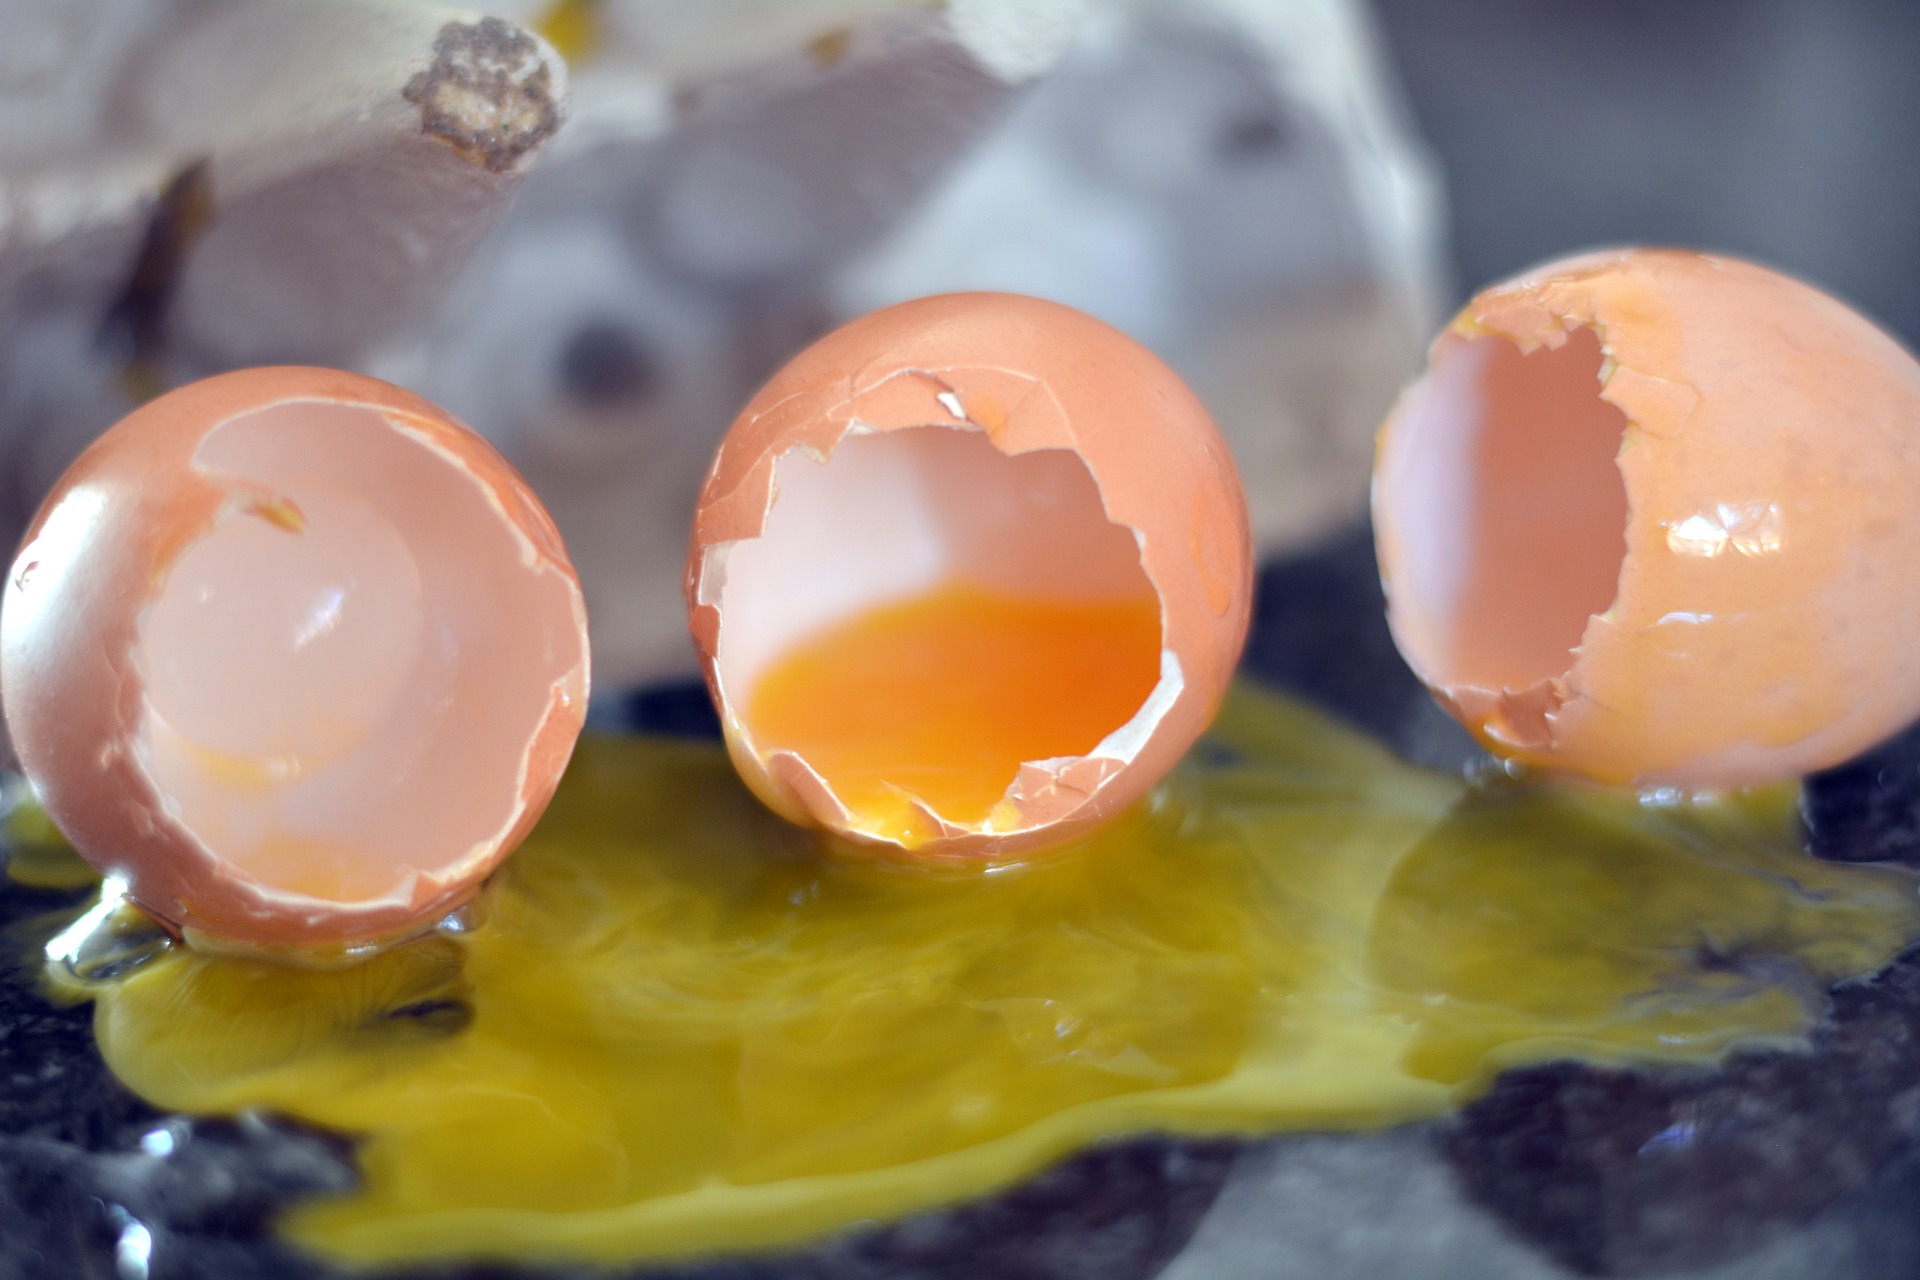 several broken eggs on a hard surface.